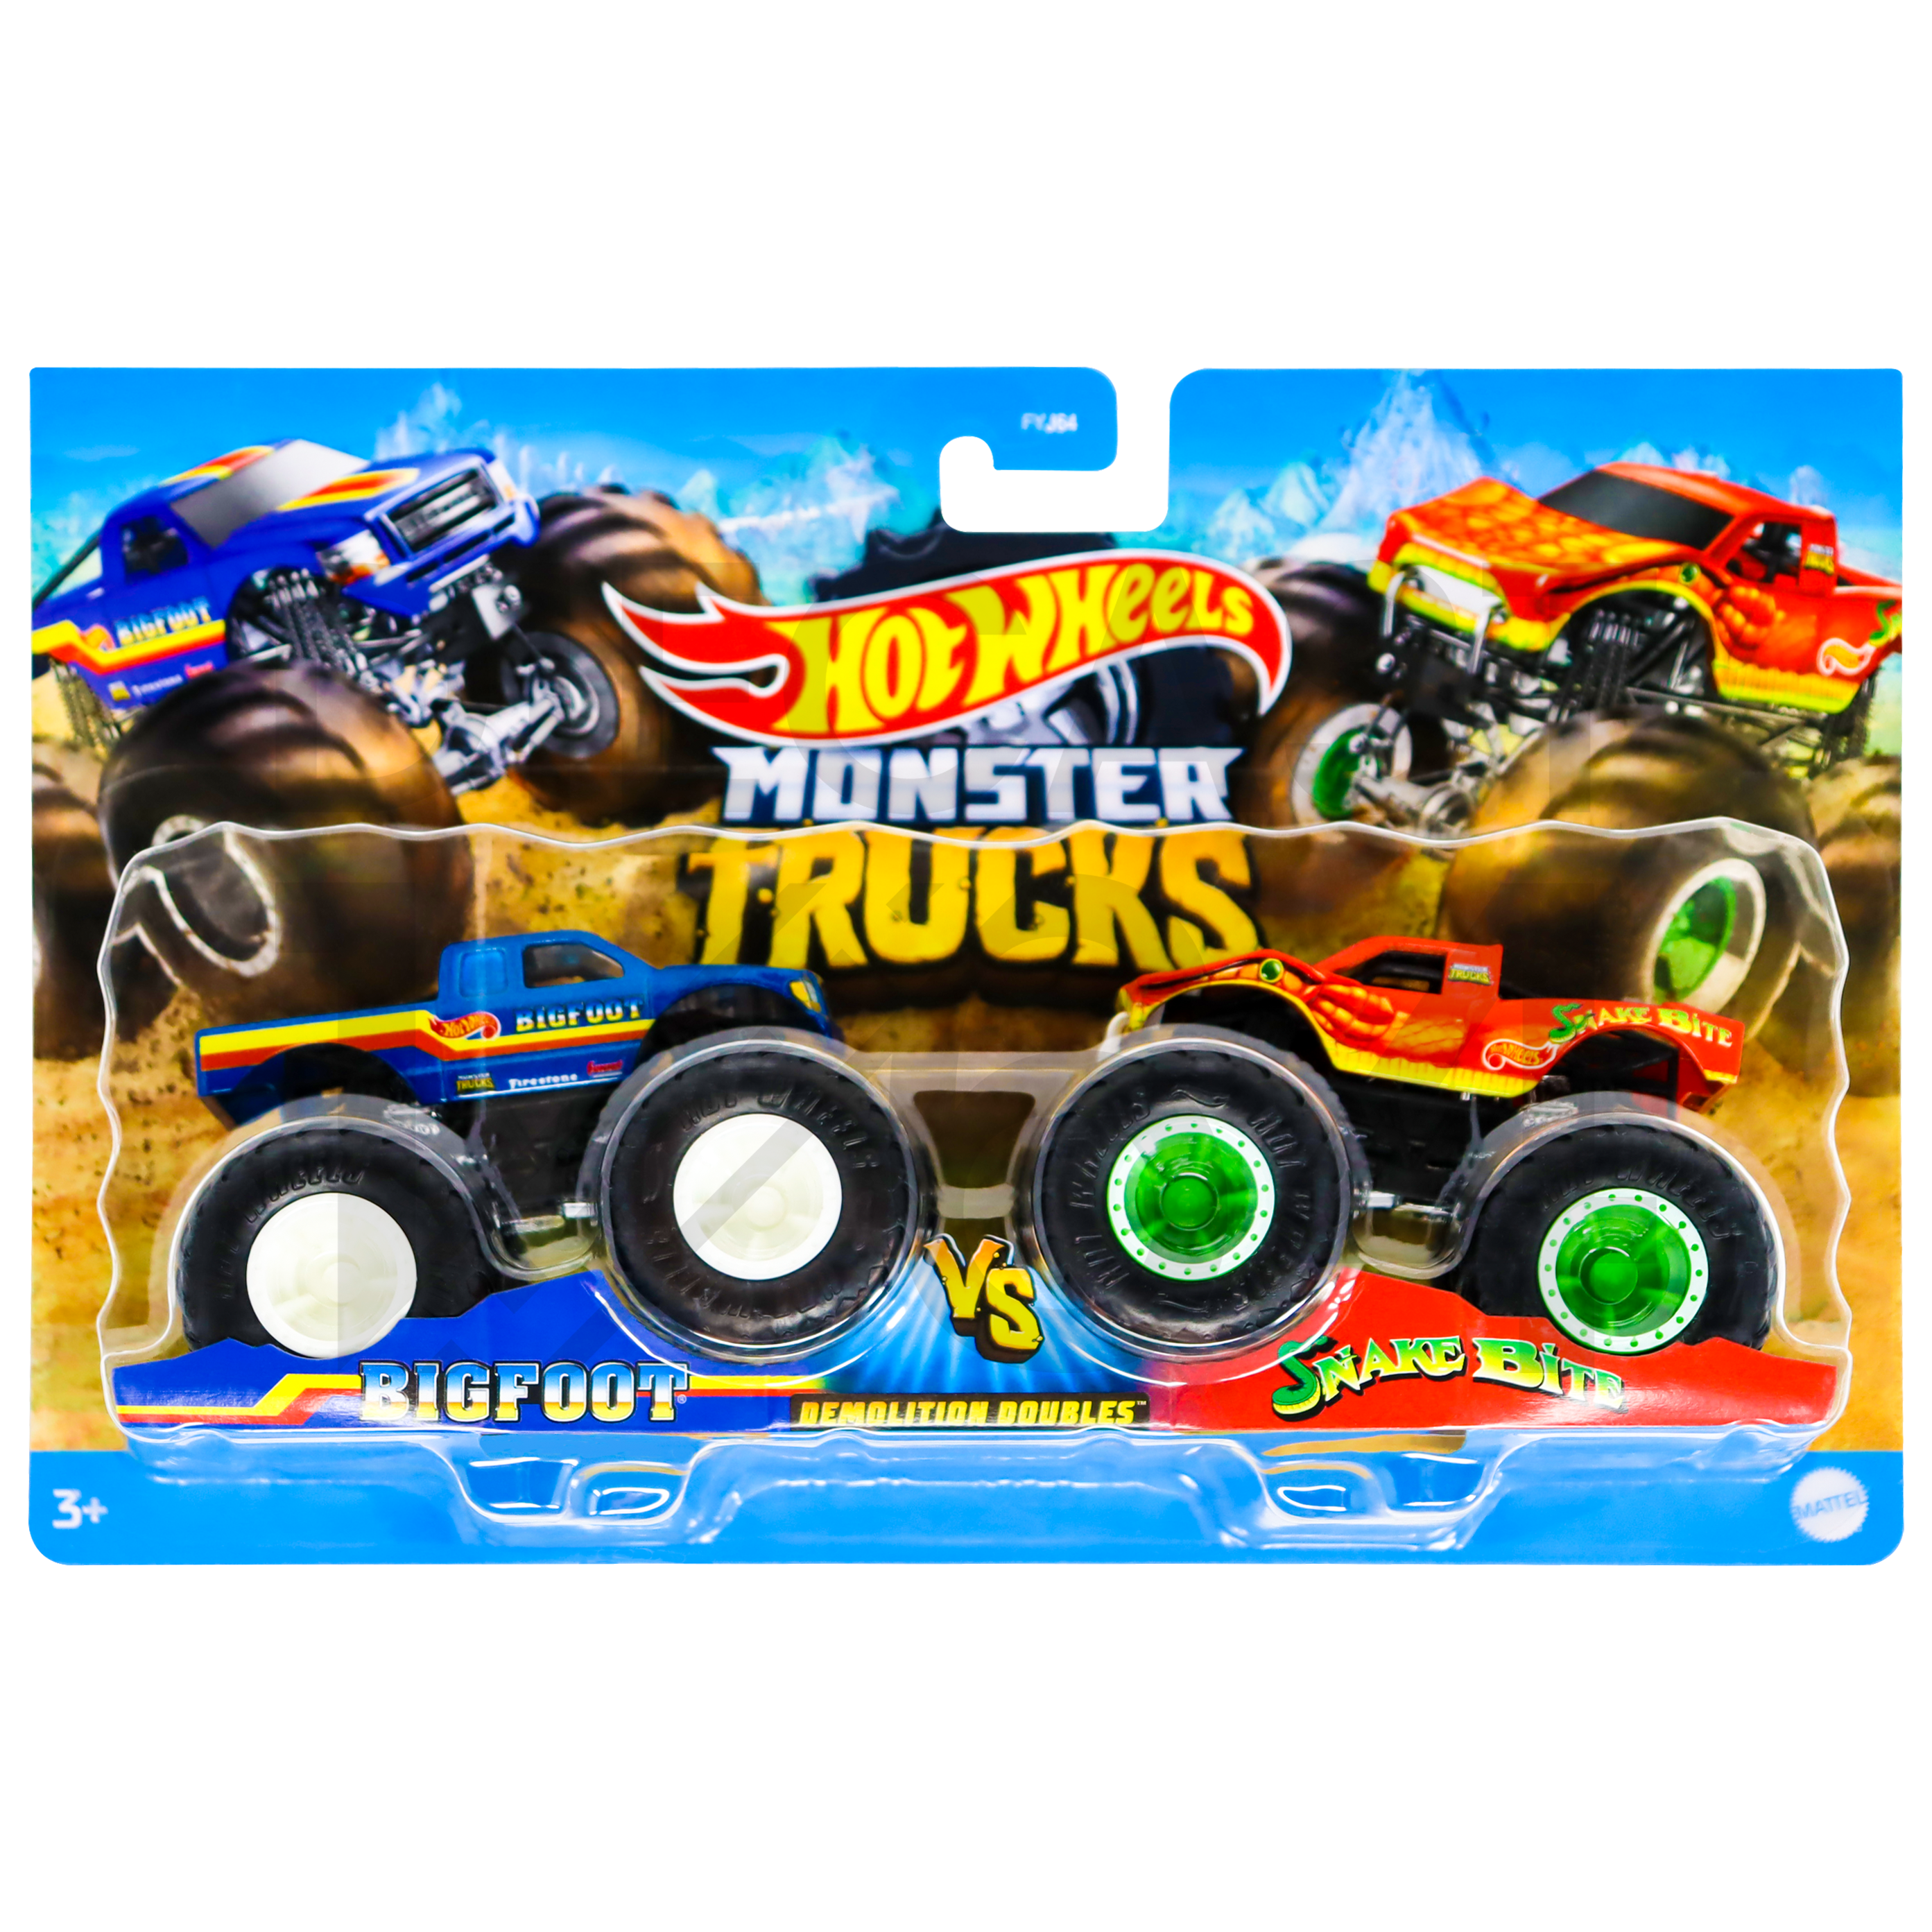 Hot Wheels Monster Trucks Demolition Doubles